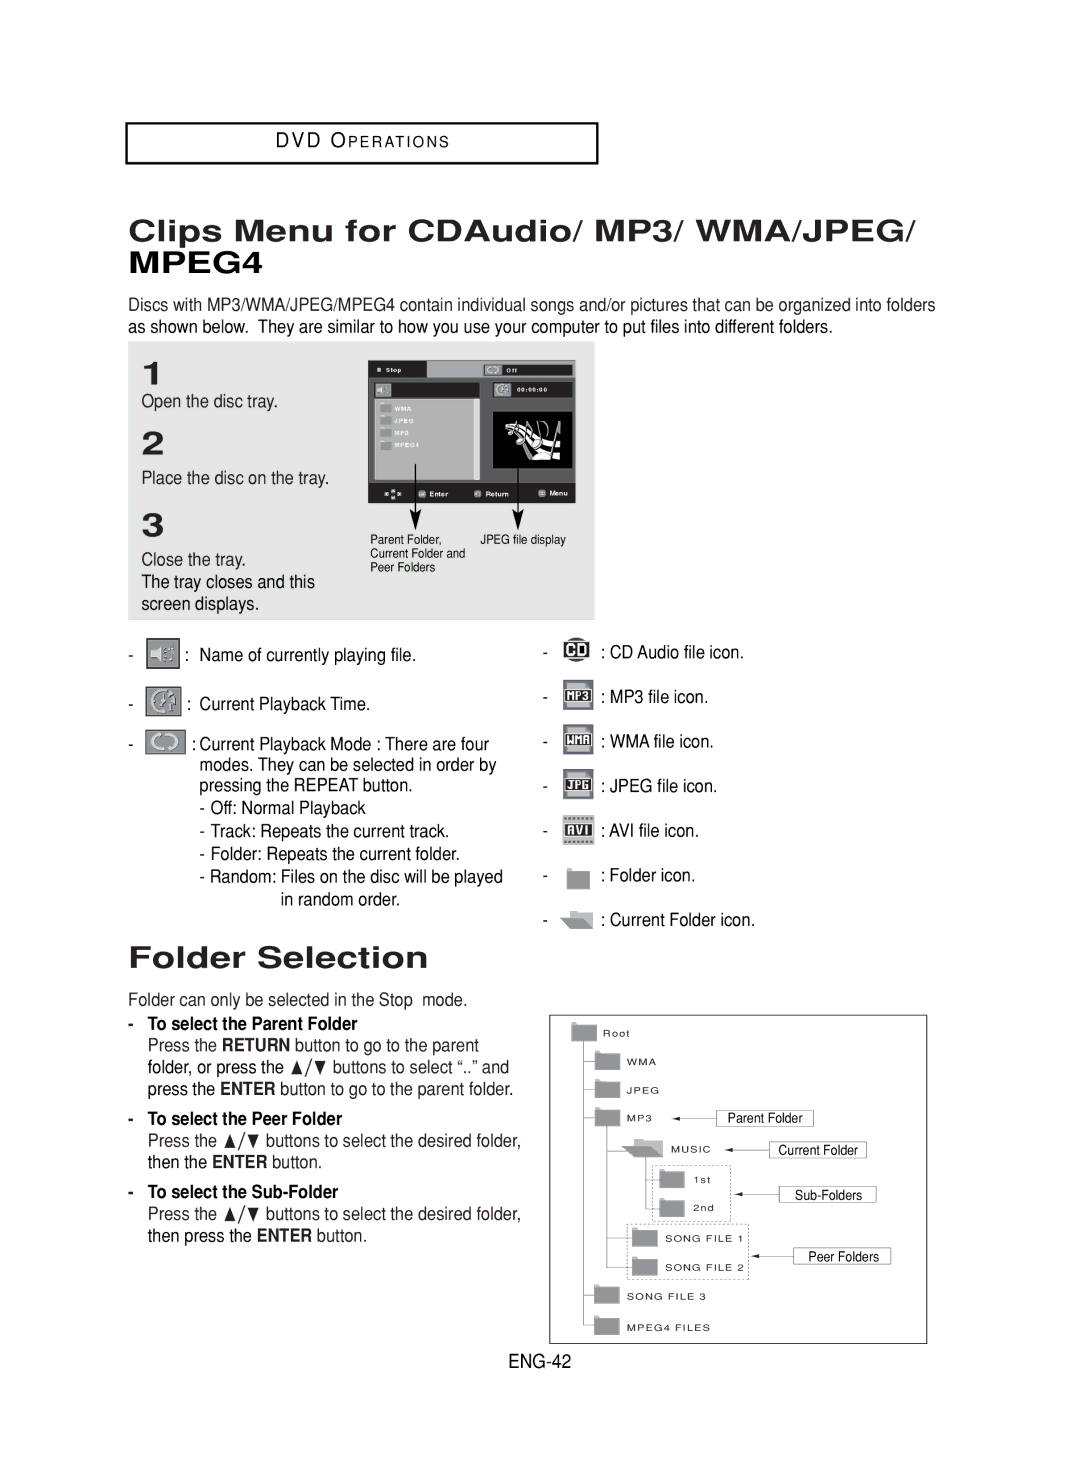 Samsung DVD-V9800 instruction manual Clips Menu for CDAudio/ MP3/ WMA/JPEG/ MPEG4, Folder Selection, ENG-42 